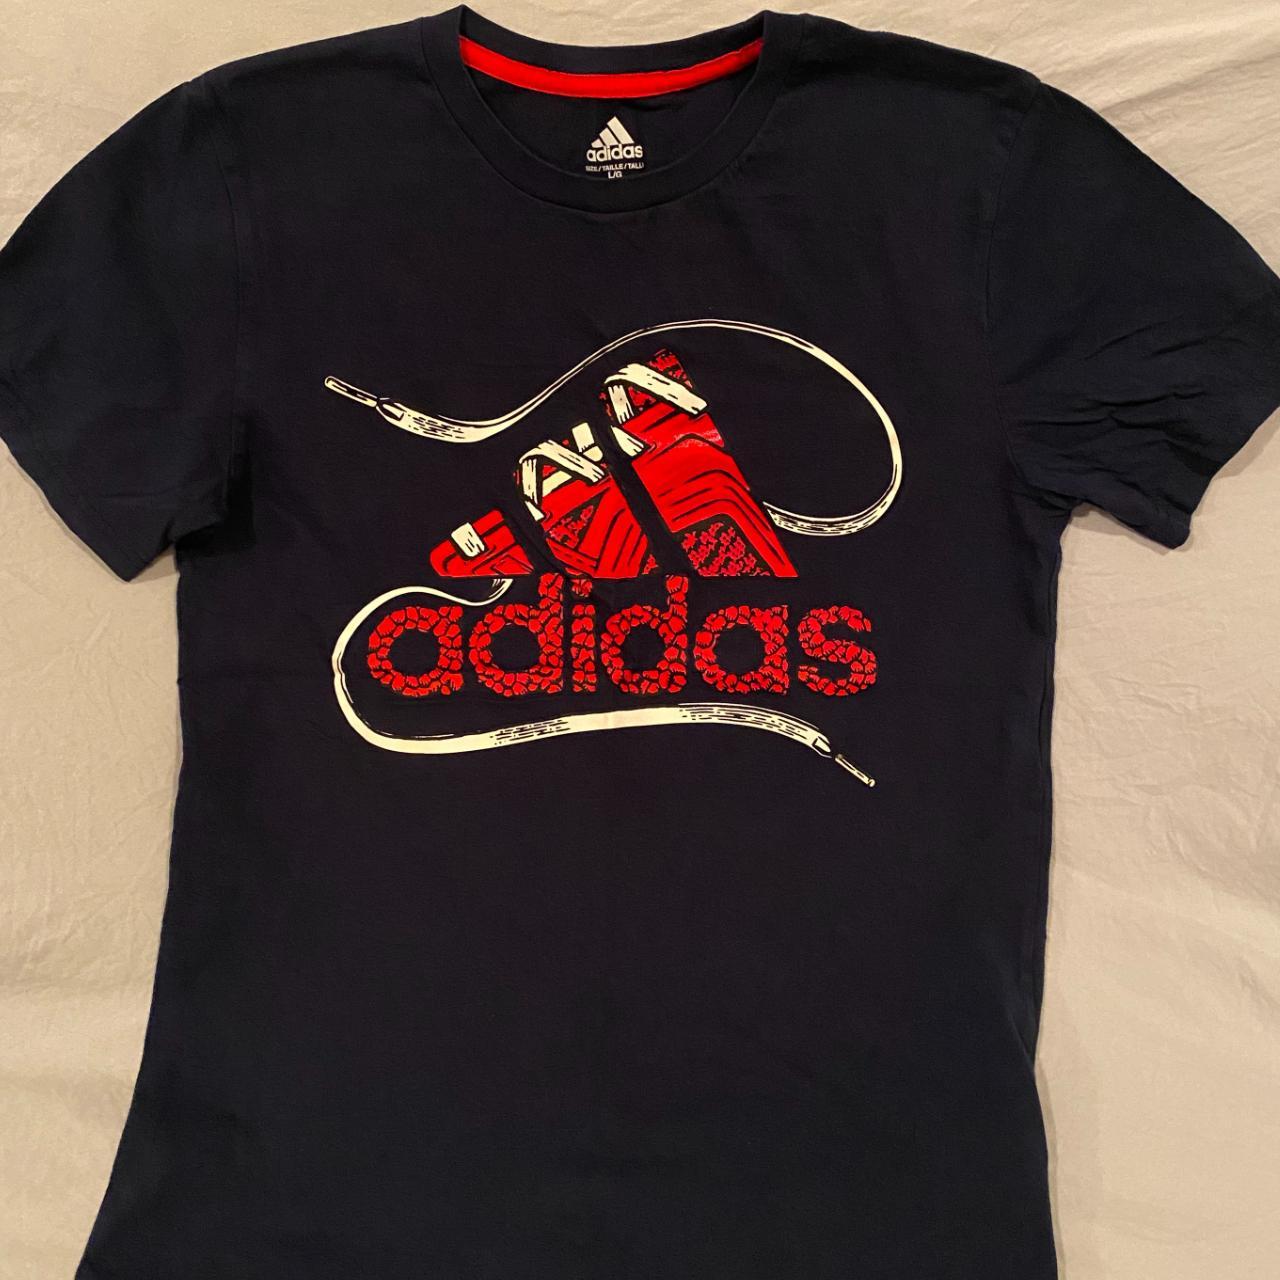 Youth Adidas LG t-shirt (14/16) - Depop